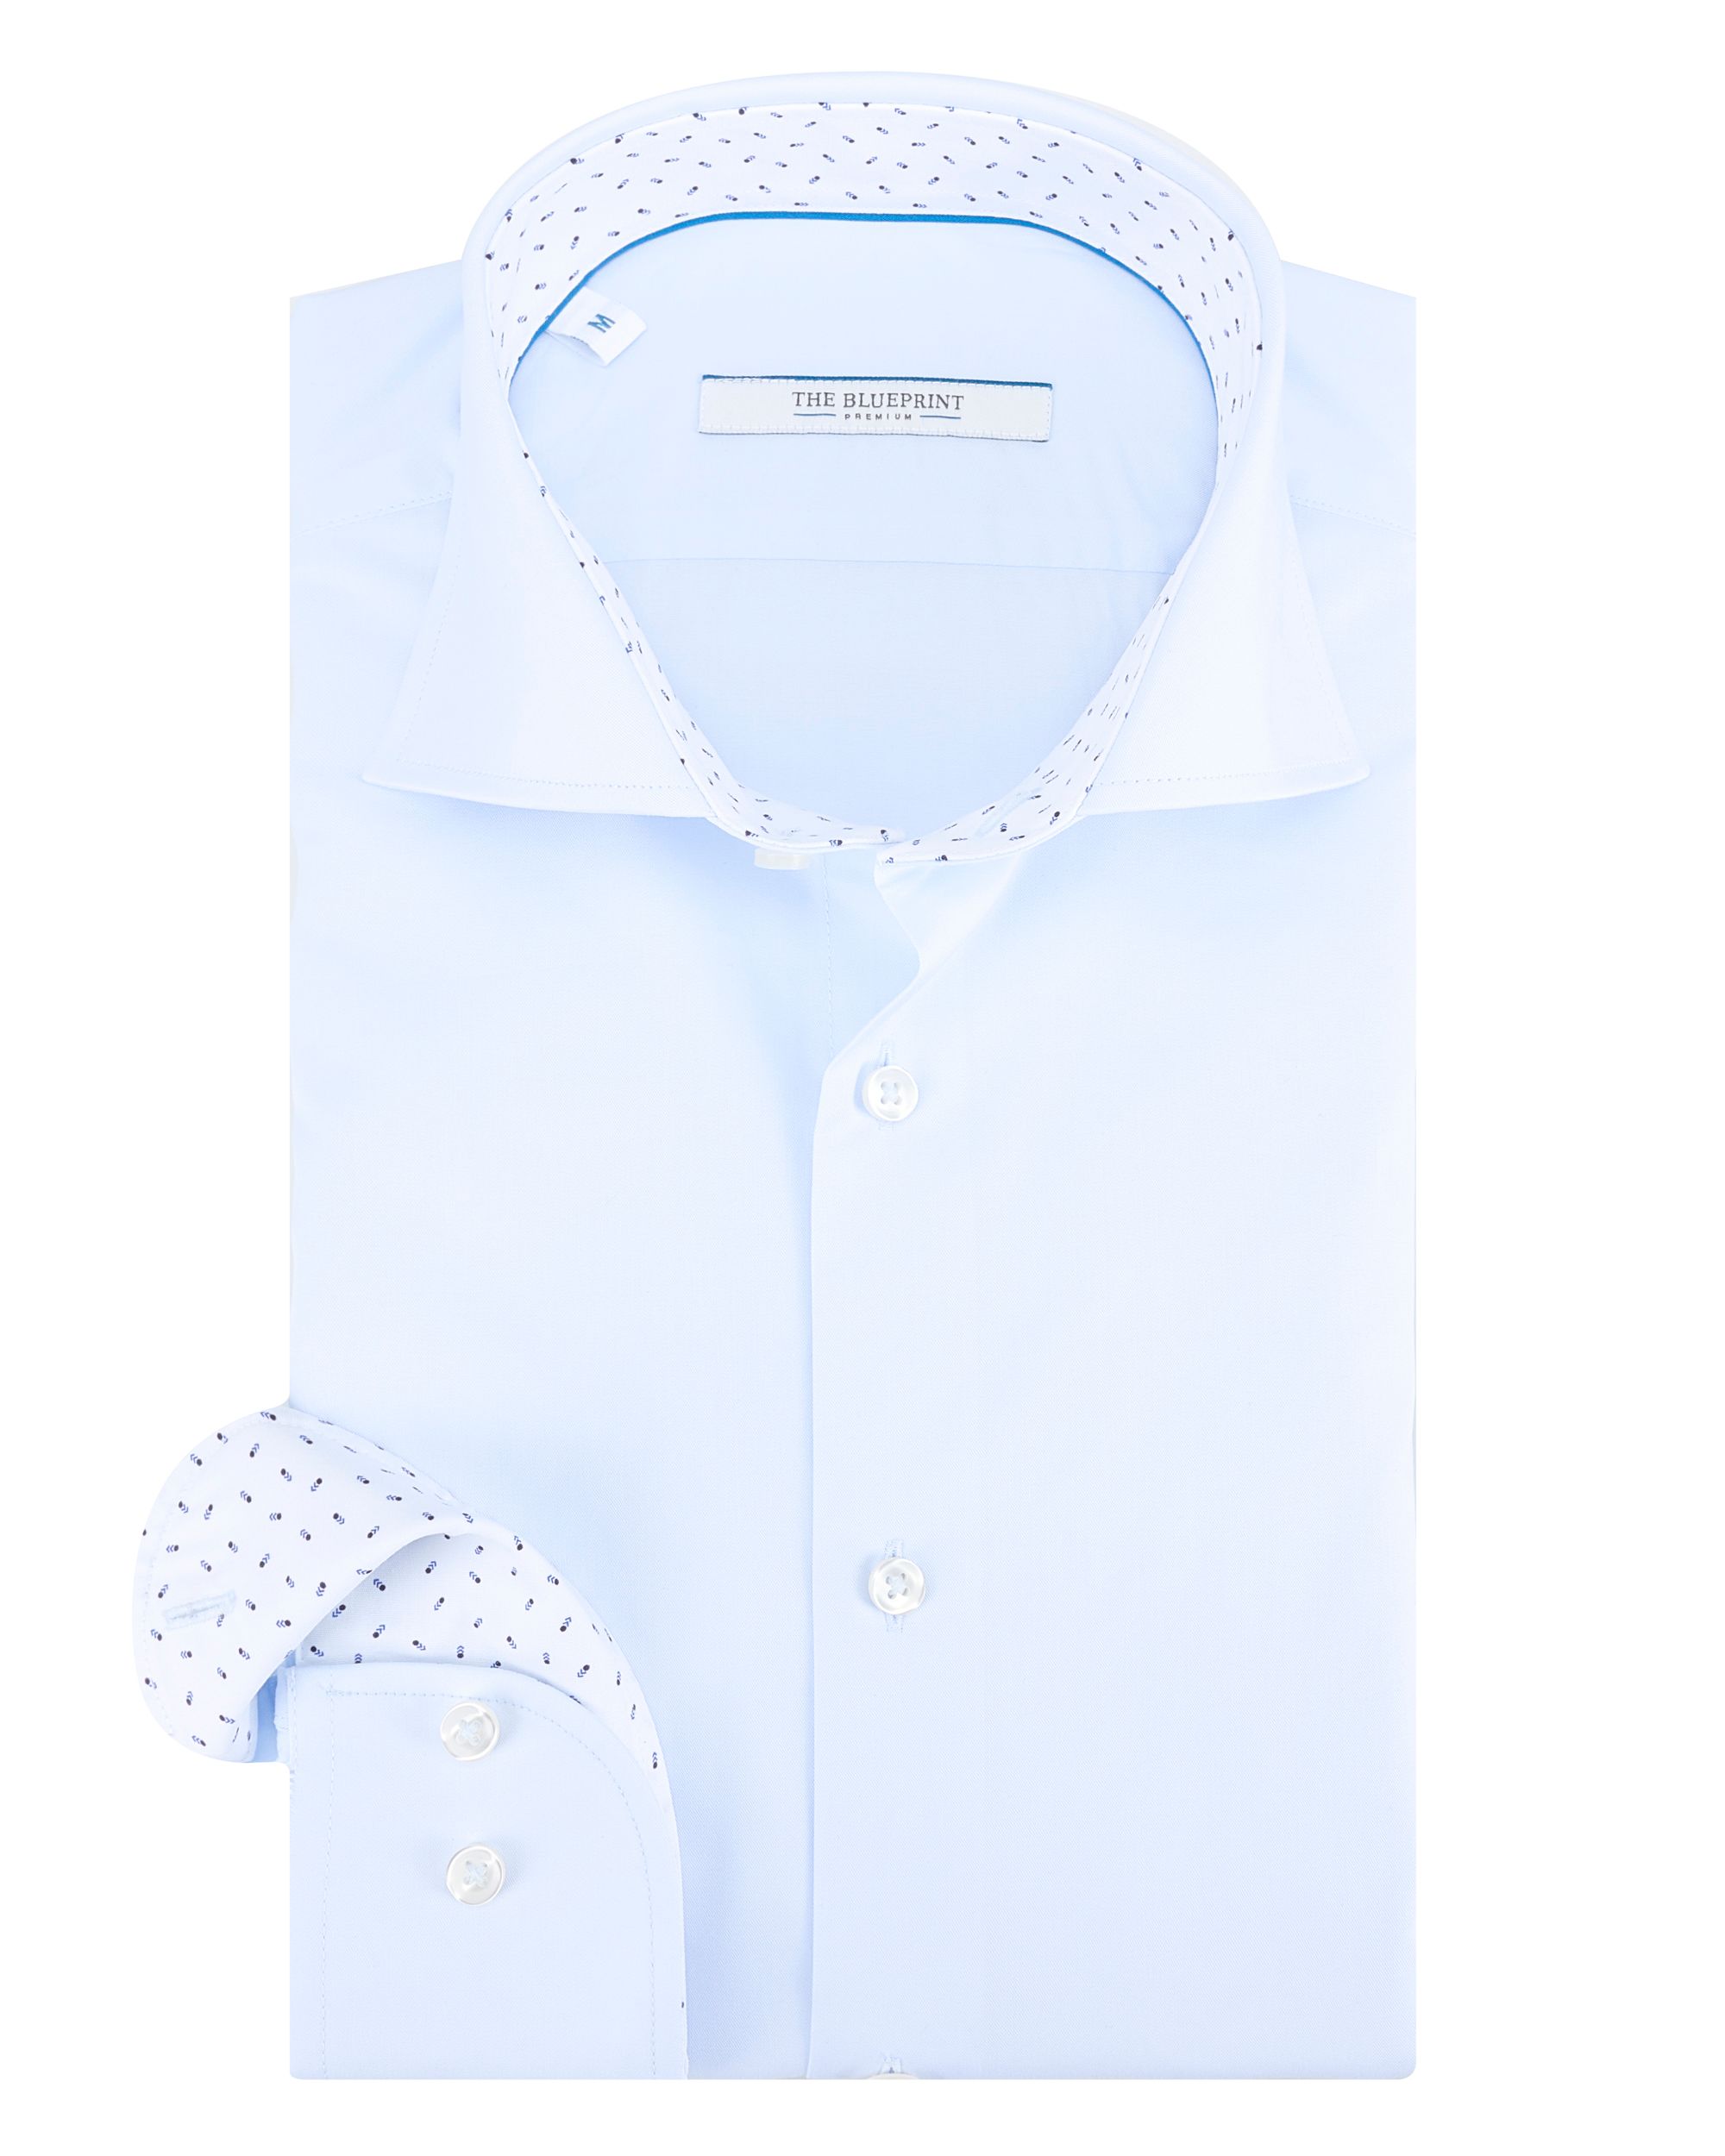 The BLUEPRINT Premium - Trendy Overhemd LM L.BLUE 092059-001-L